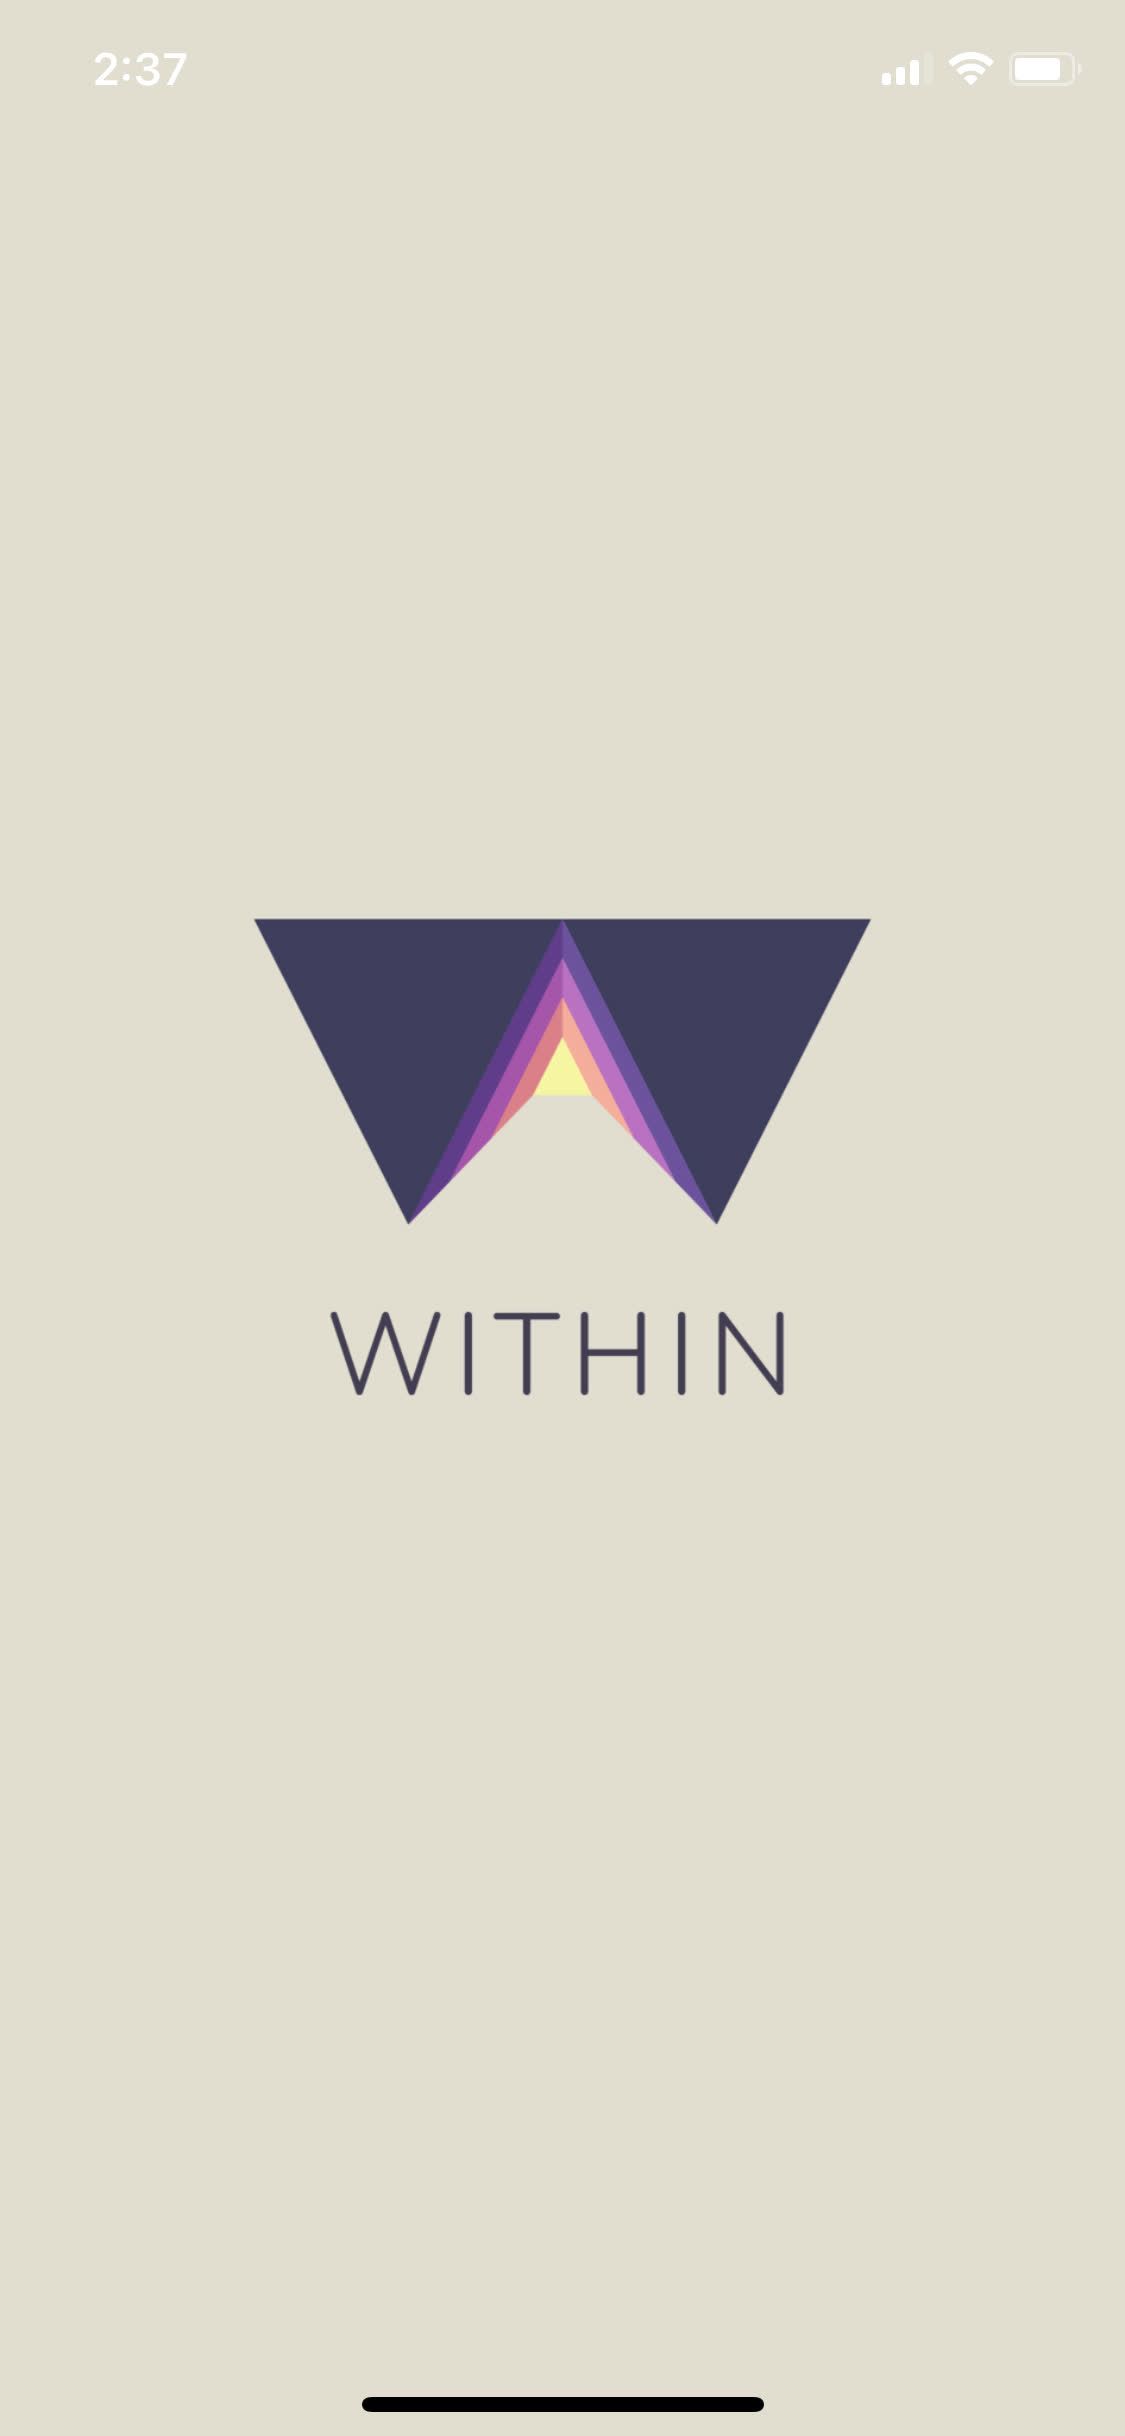 within vr logo